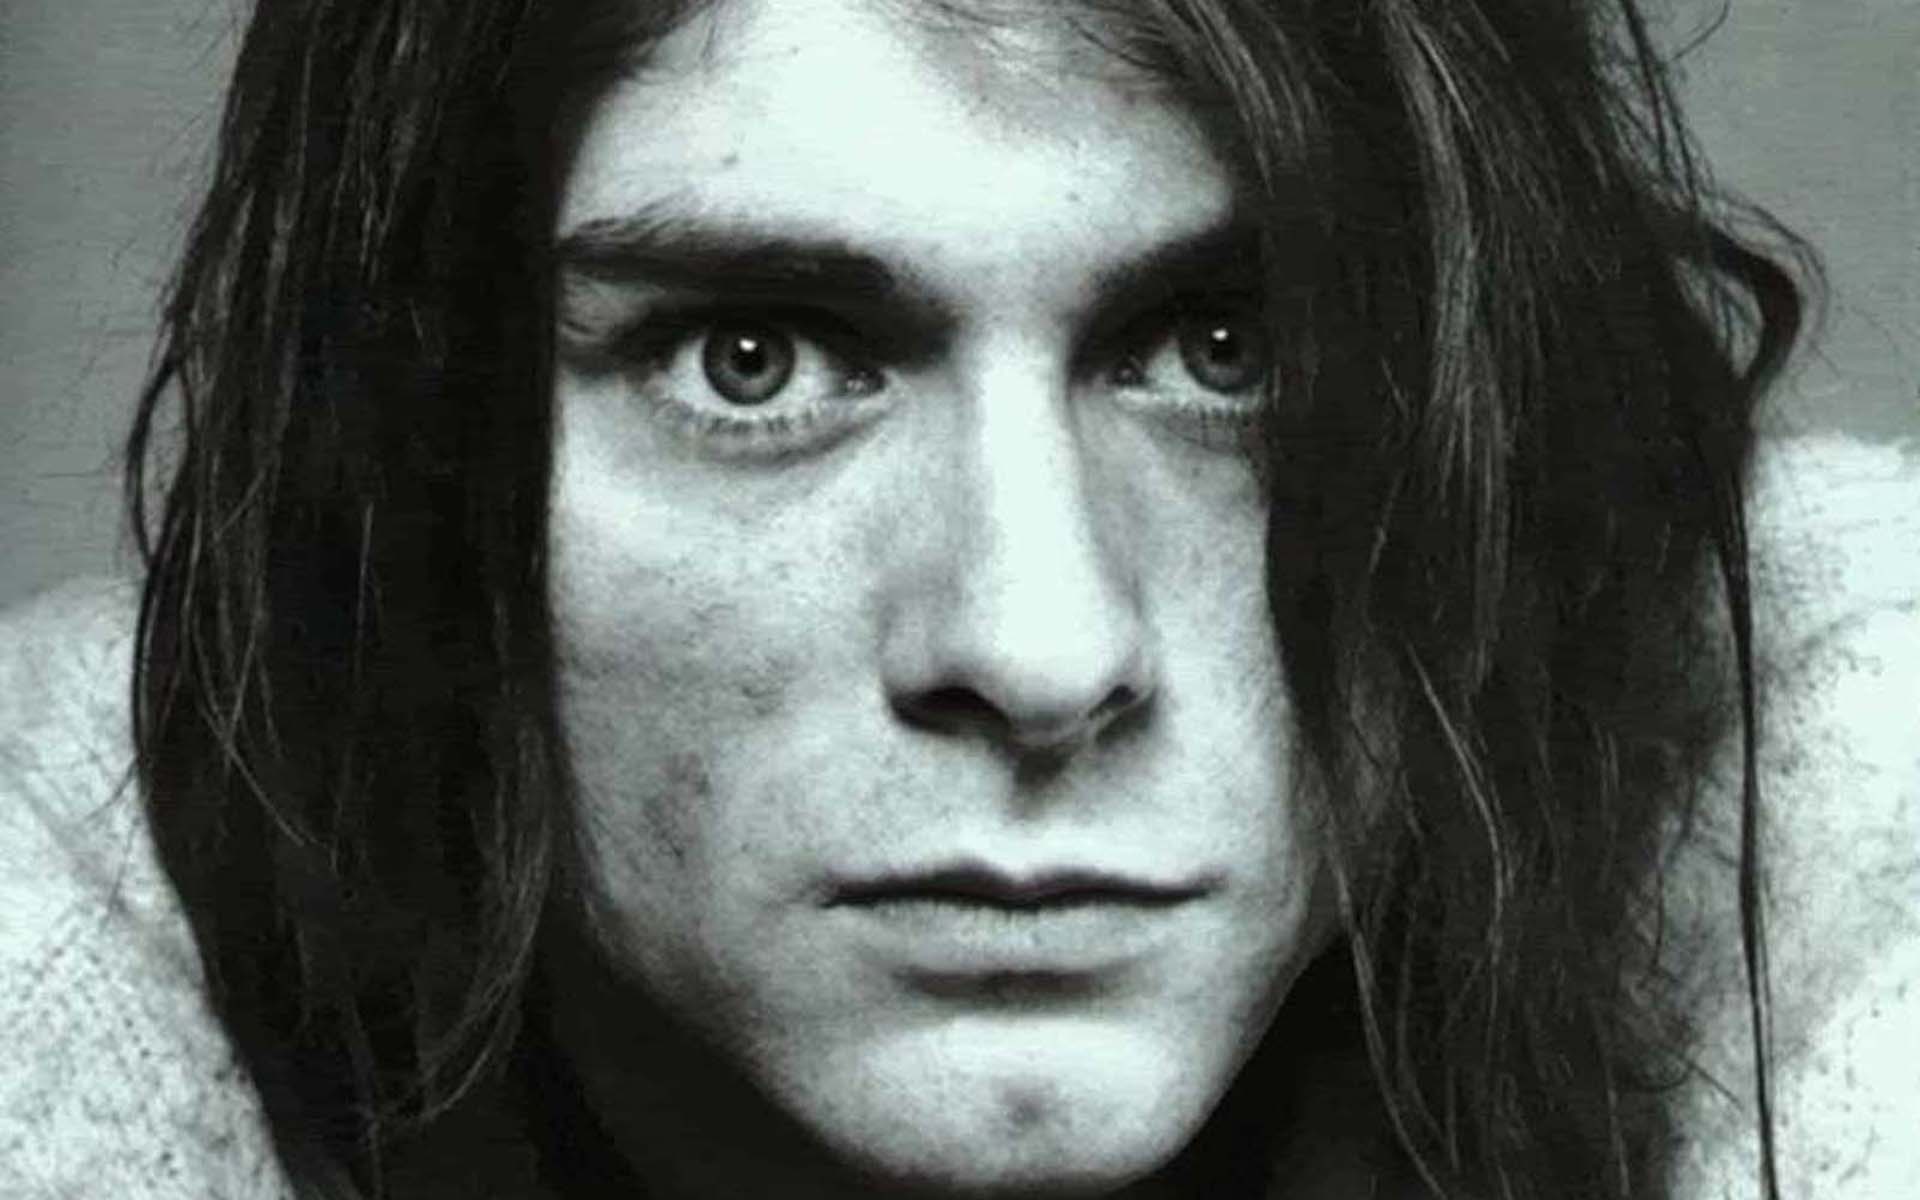 Kurt-Cobain. “